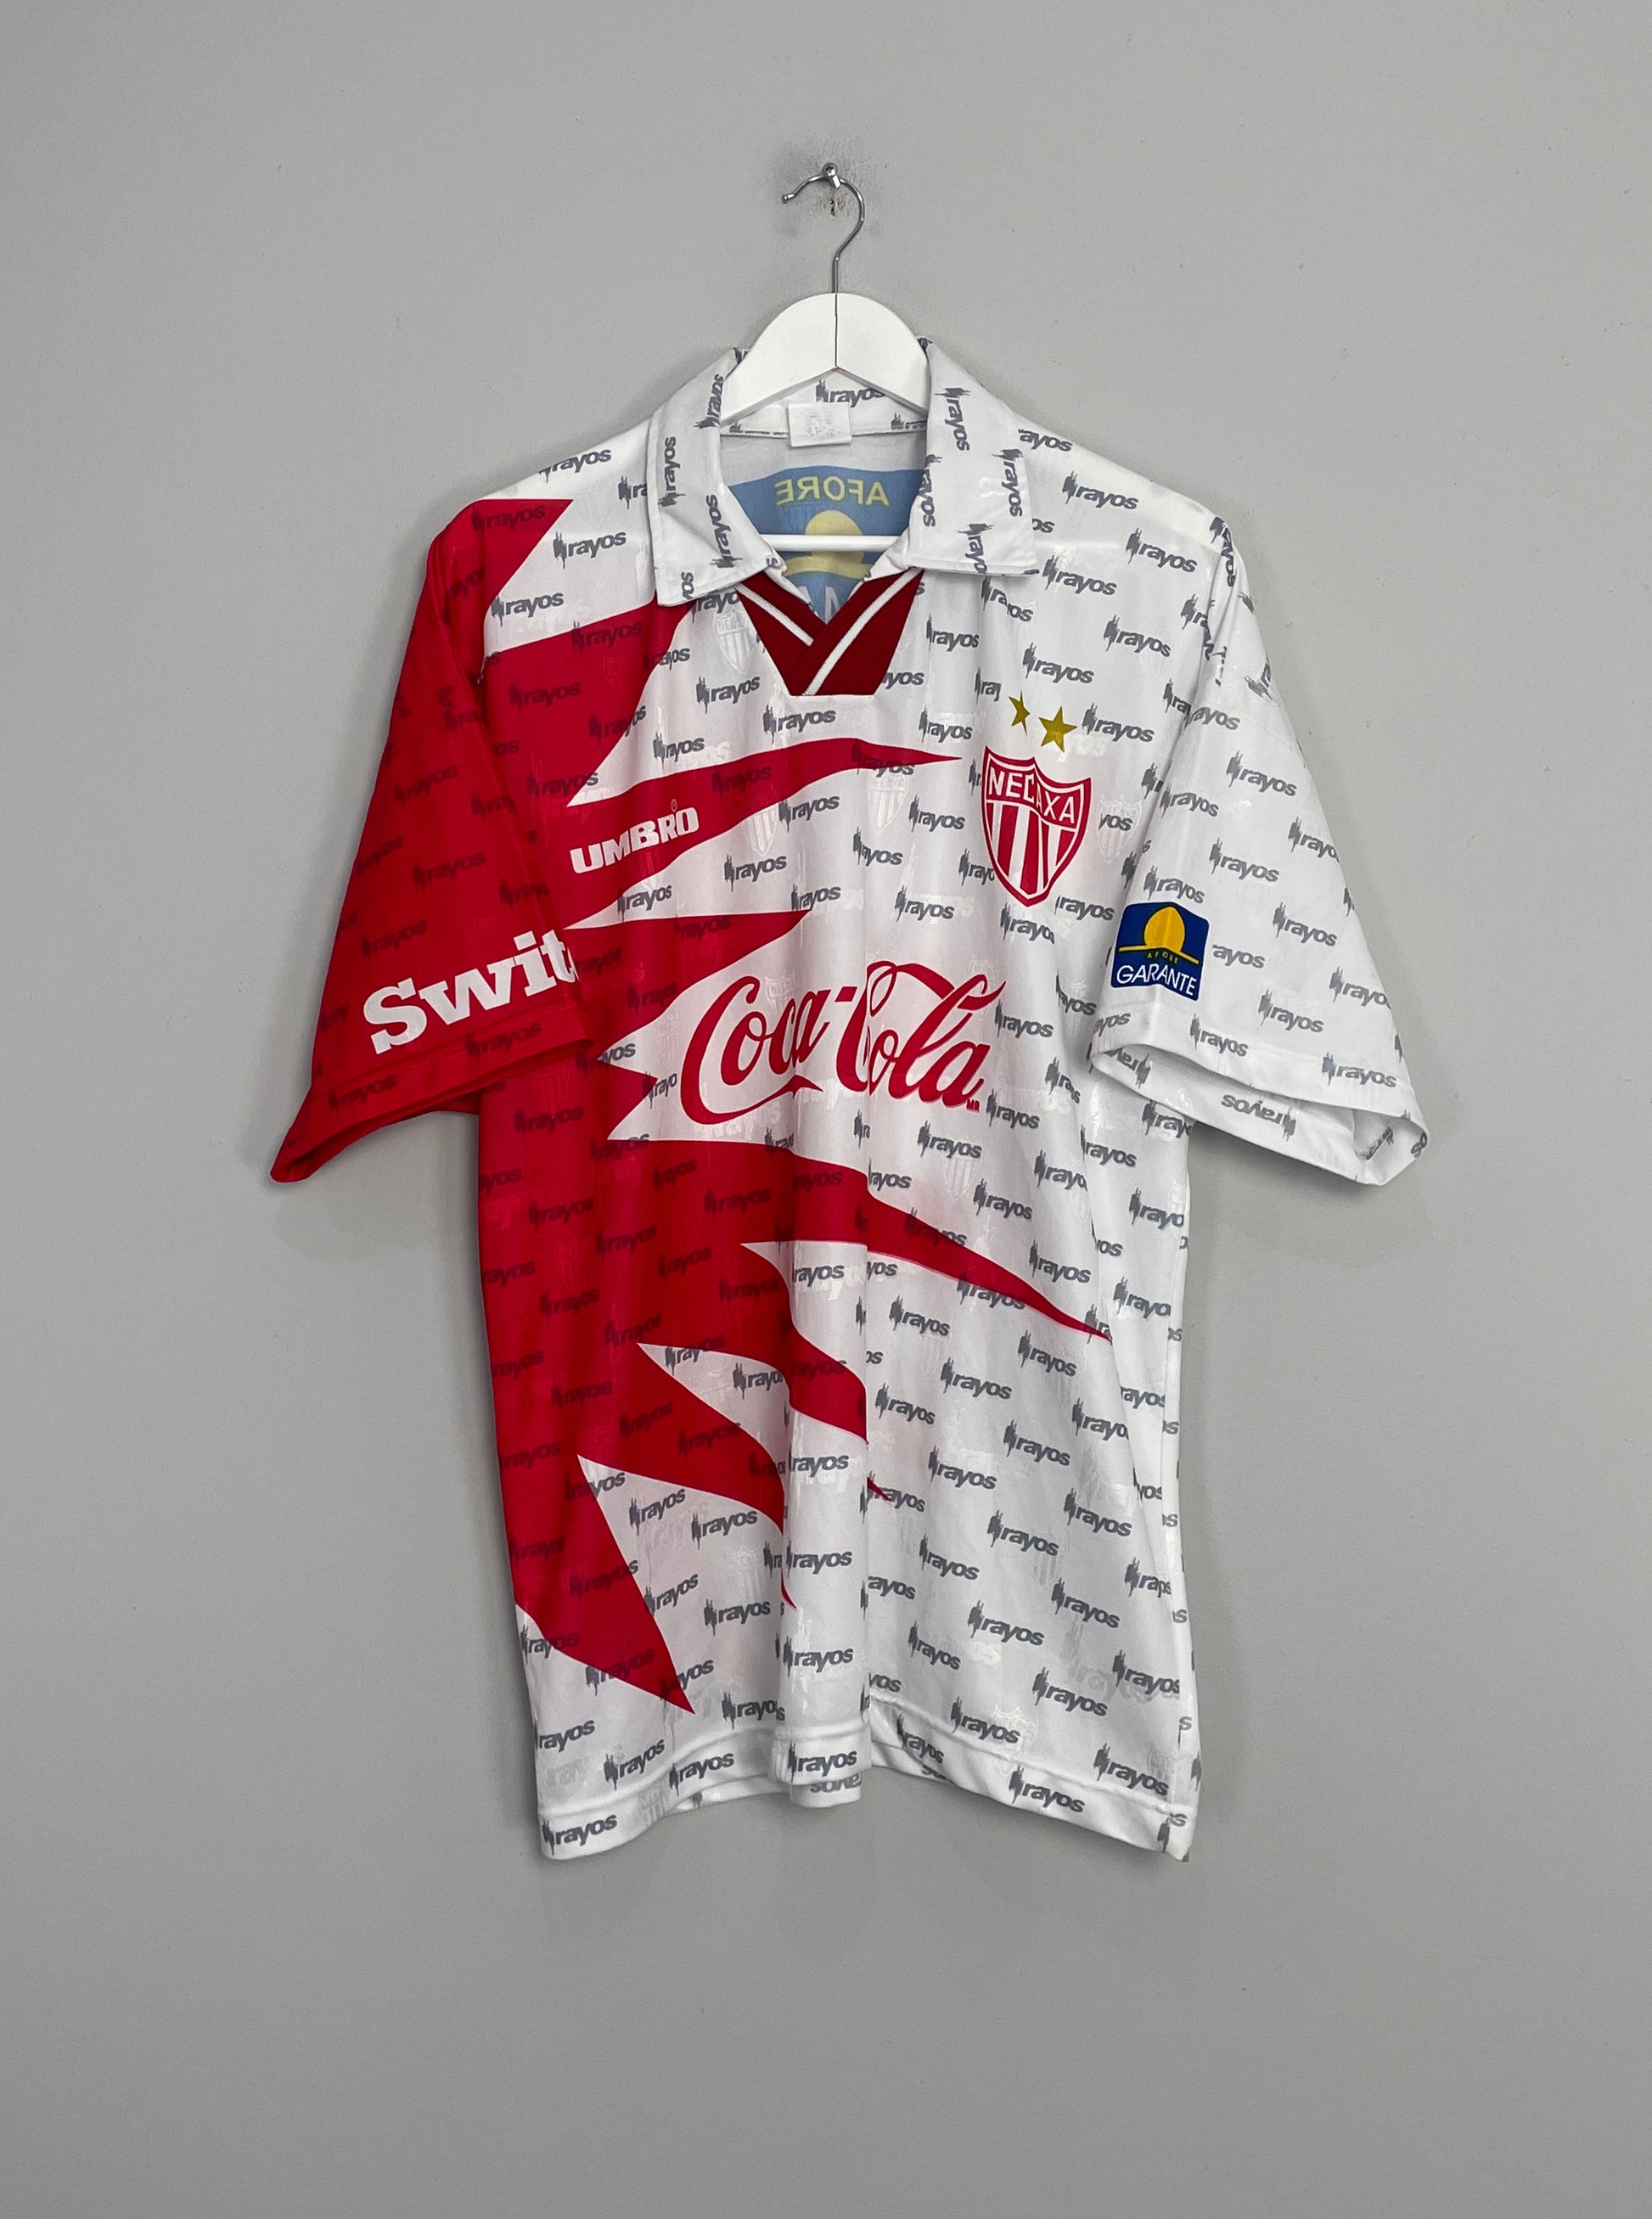 Image of the Necaxa shirt from the 1998/99 season